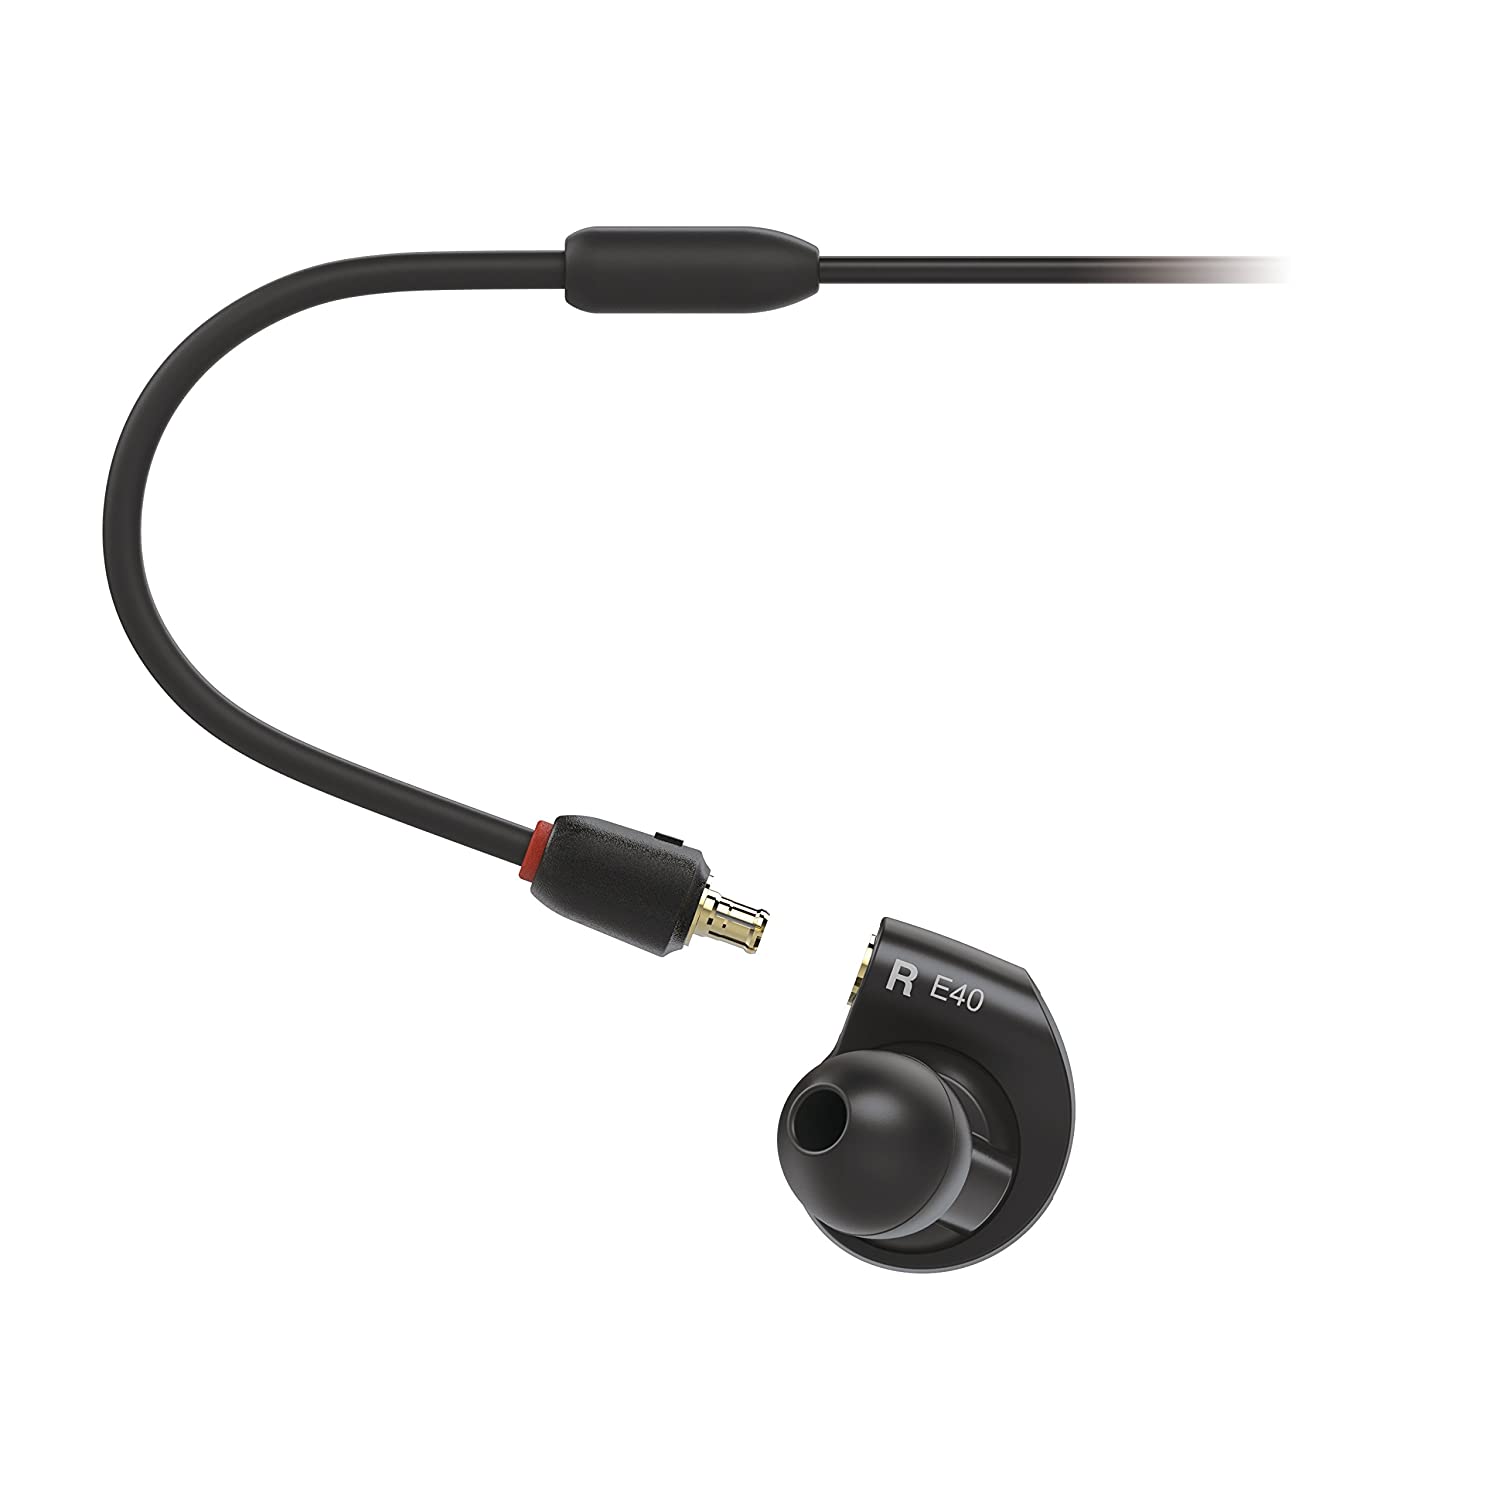 Audio-Technica ATH E40 In Ear Monitor Headphones in India